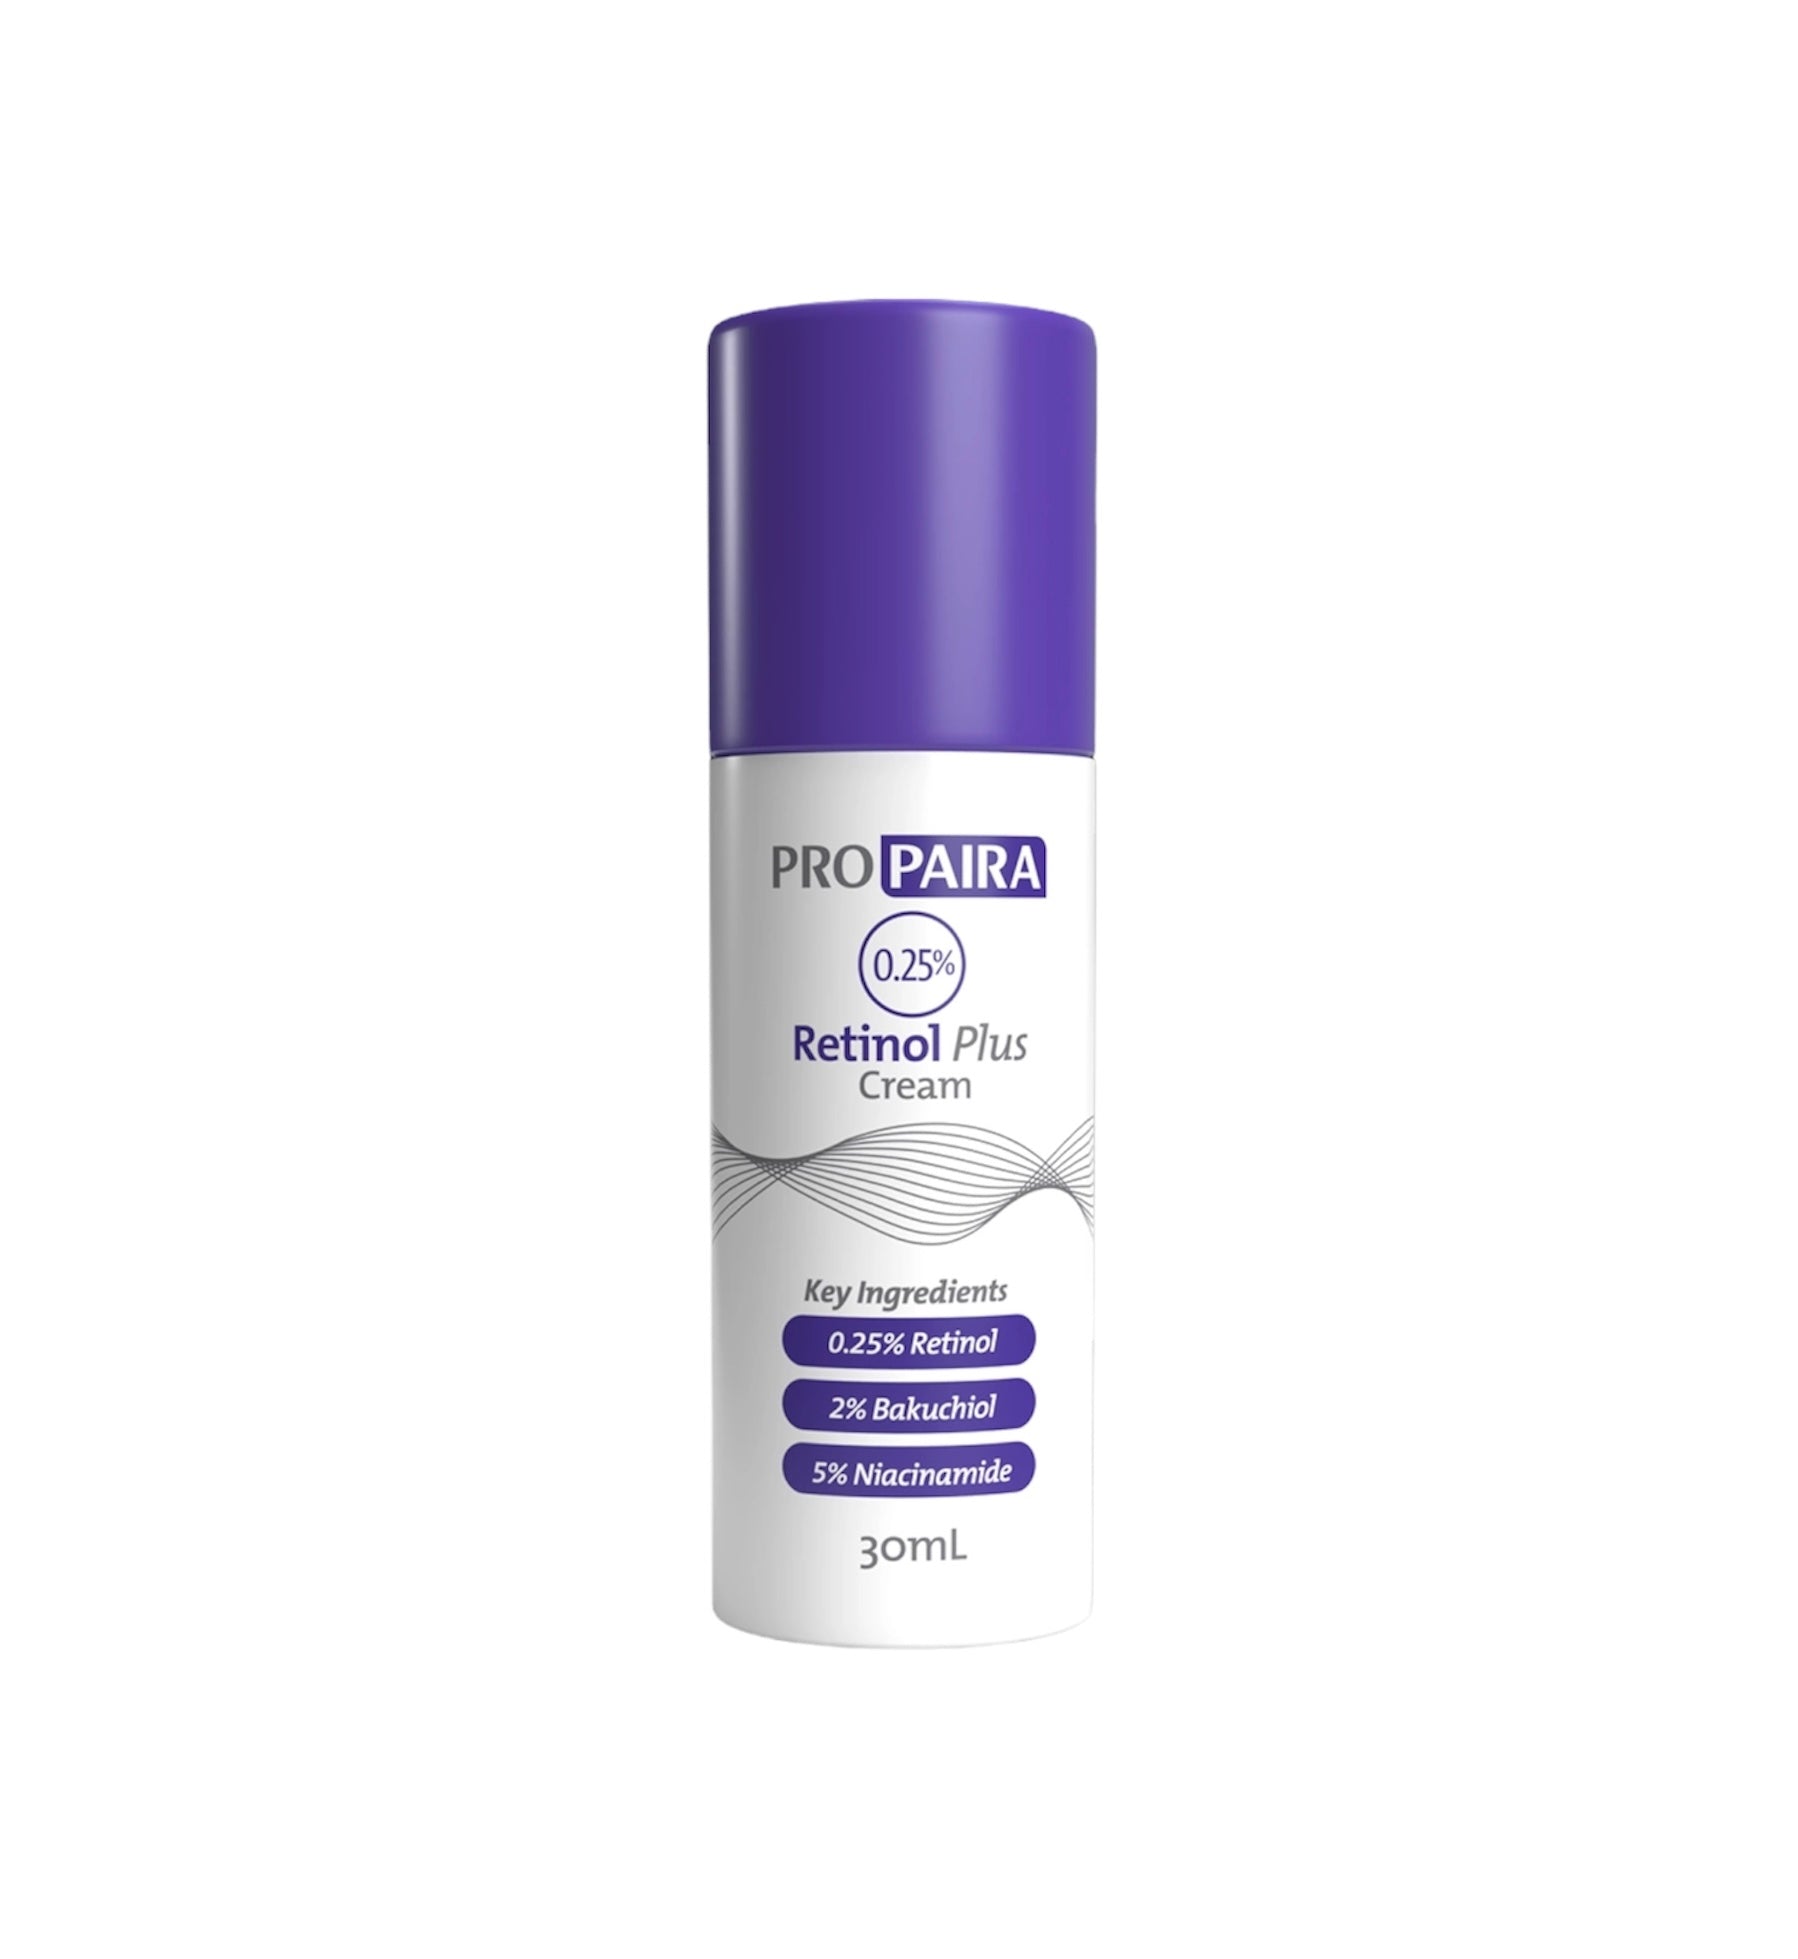 Propaira Retinol Plus Cream 30ml | Skin Plus Compounding Pharmacy